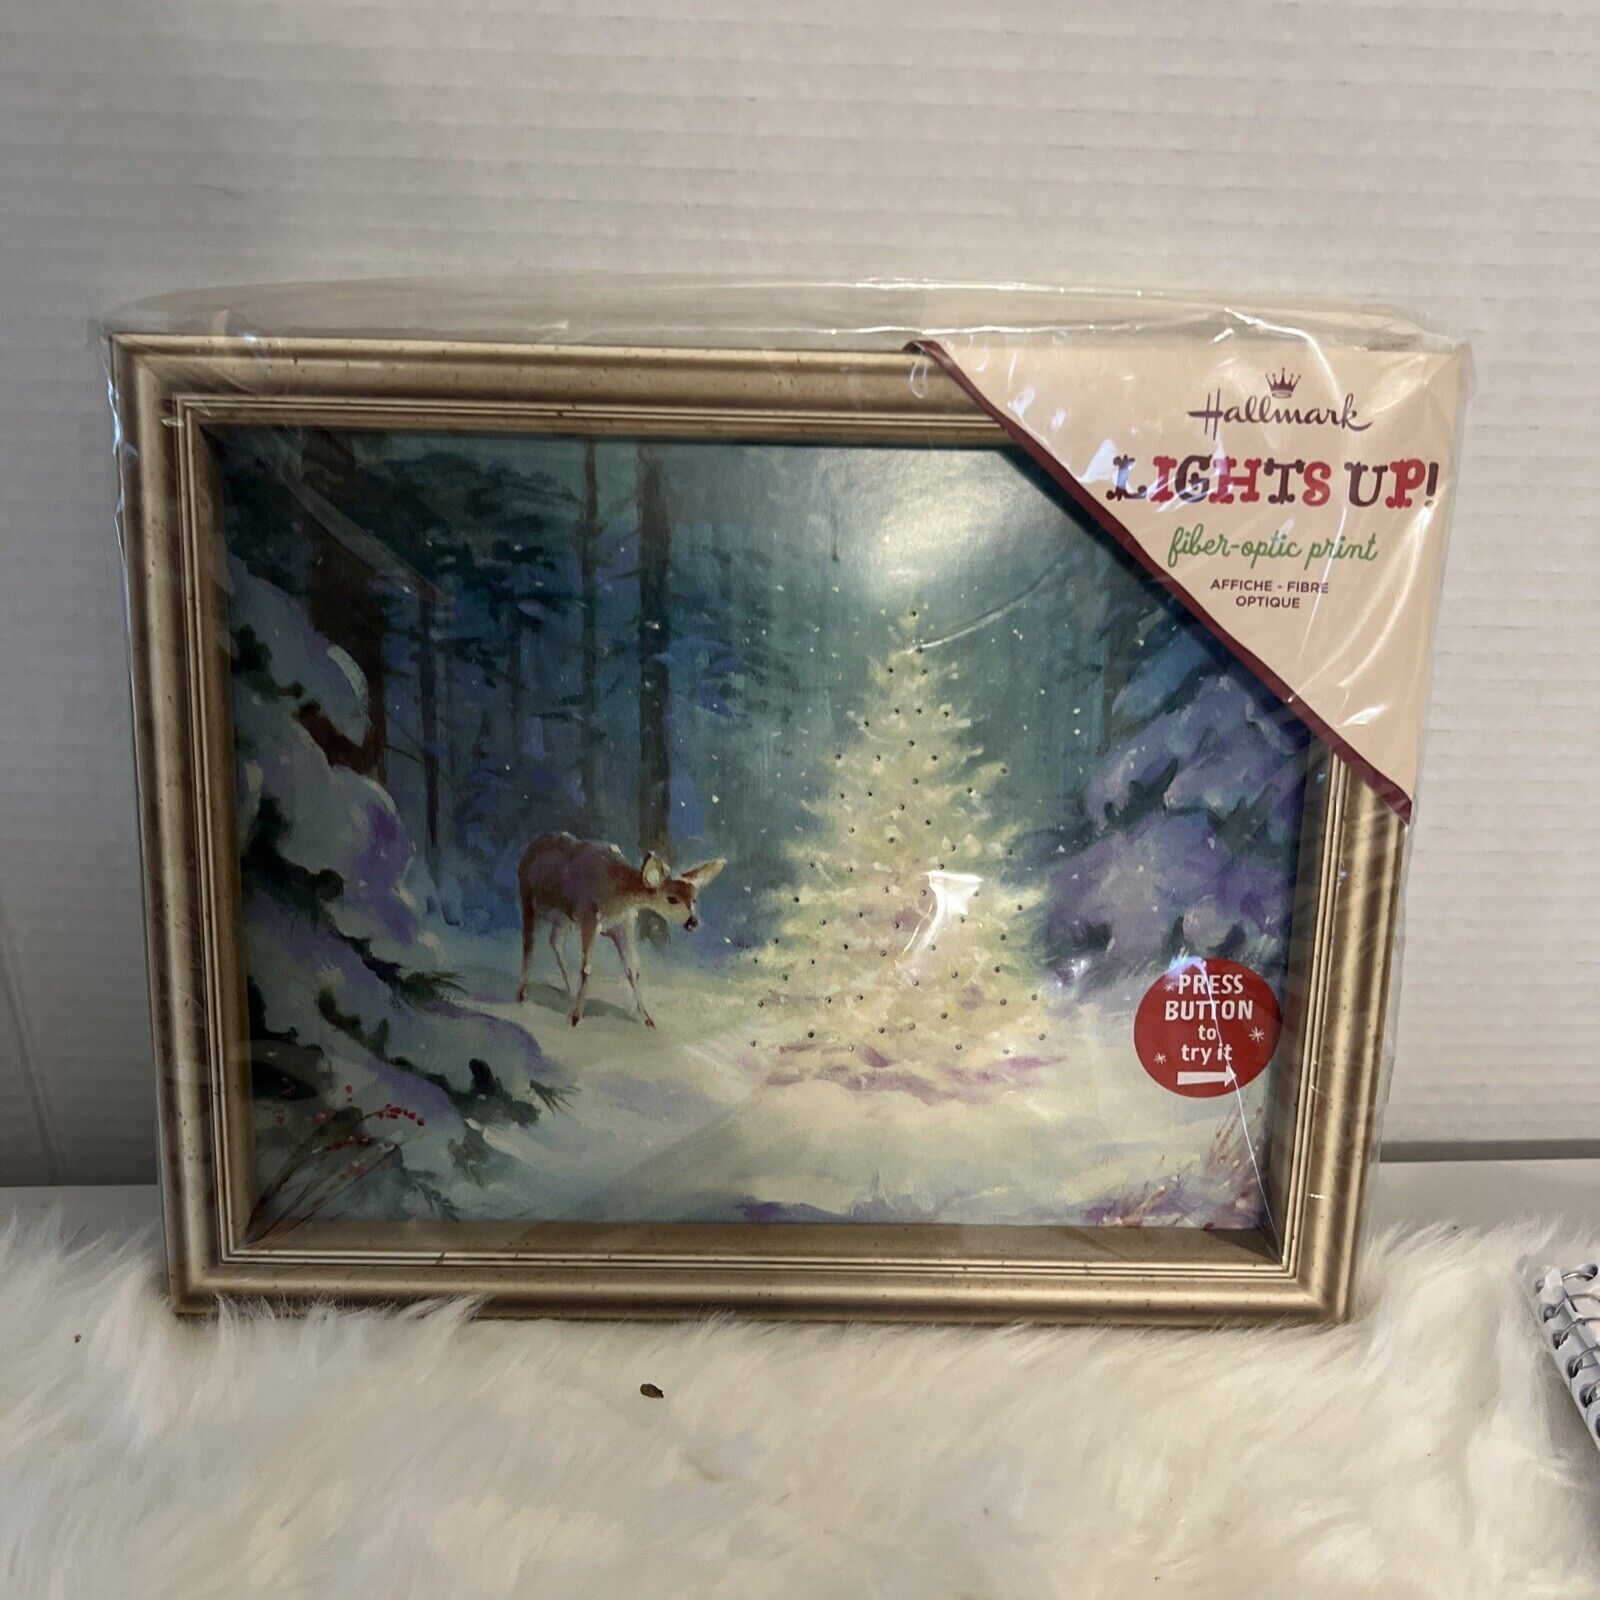 Hallmark Christmas Deer Light Up Fiber-optic Print New In Wrap